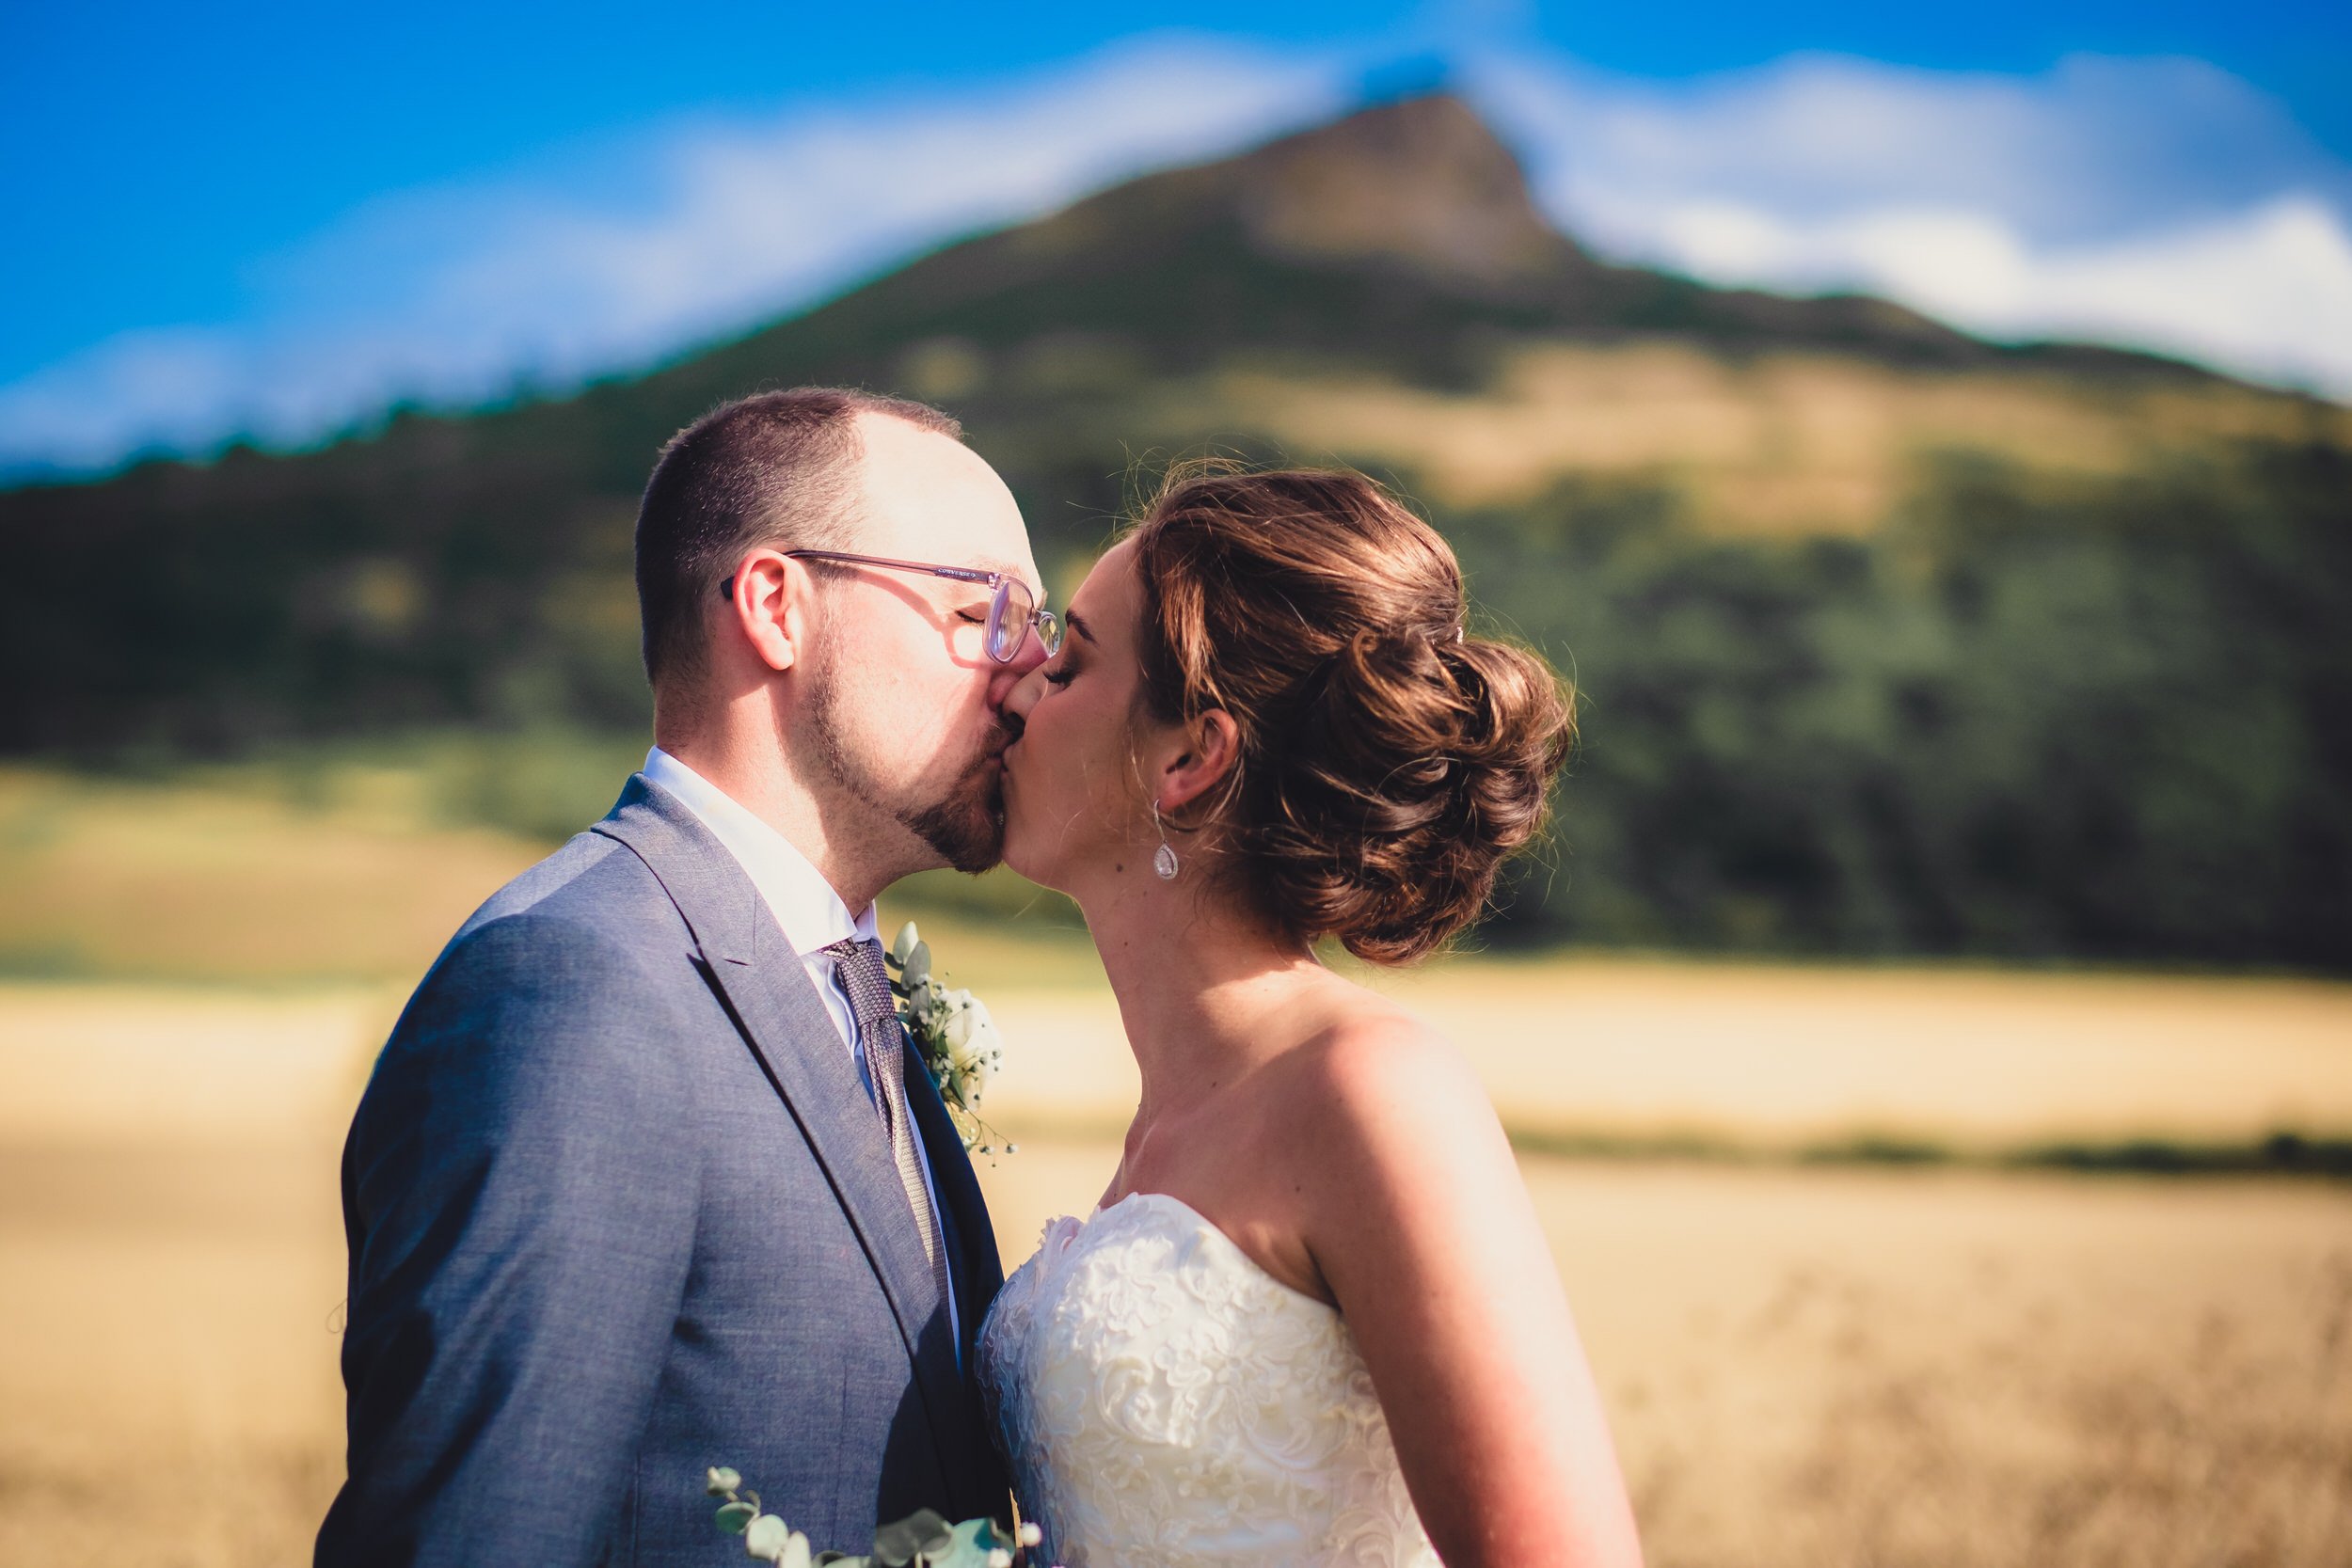 Bride and groom sharing a kiss | taylor wedding | wedding photography glasgow.jpg